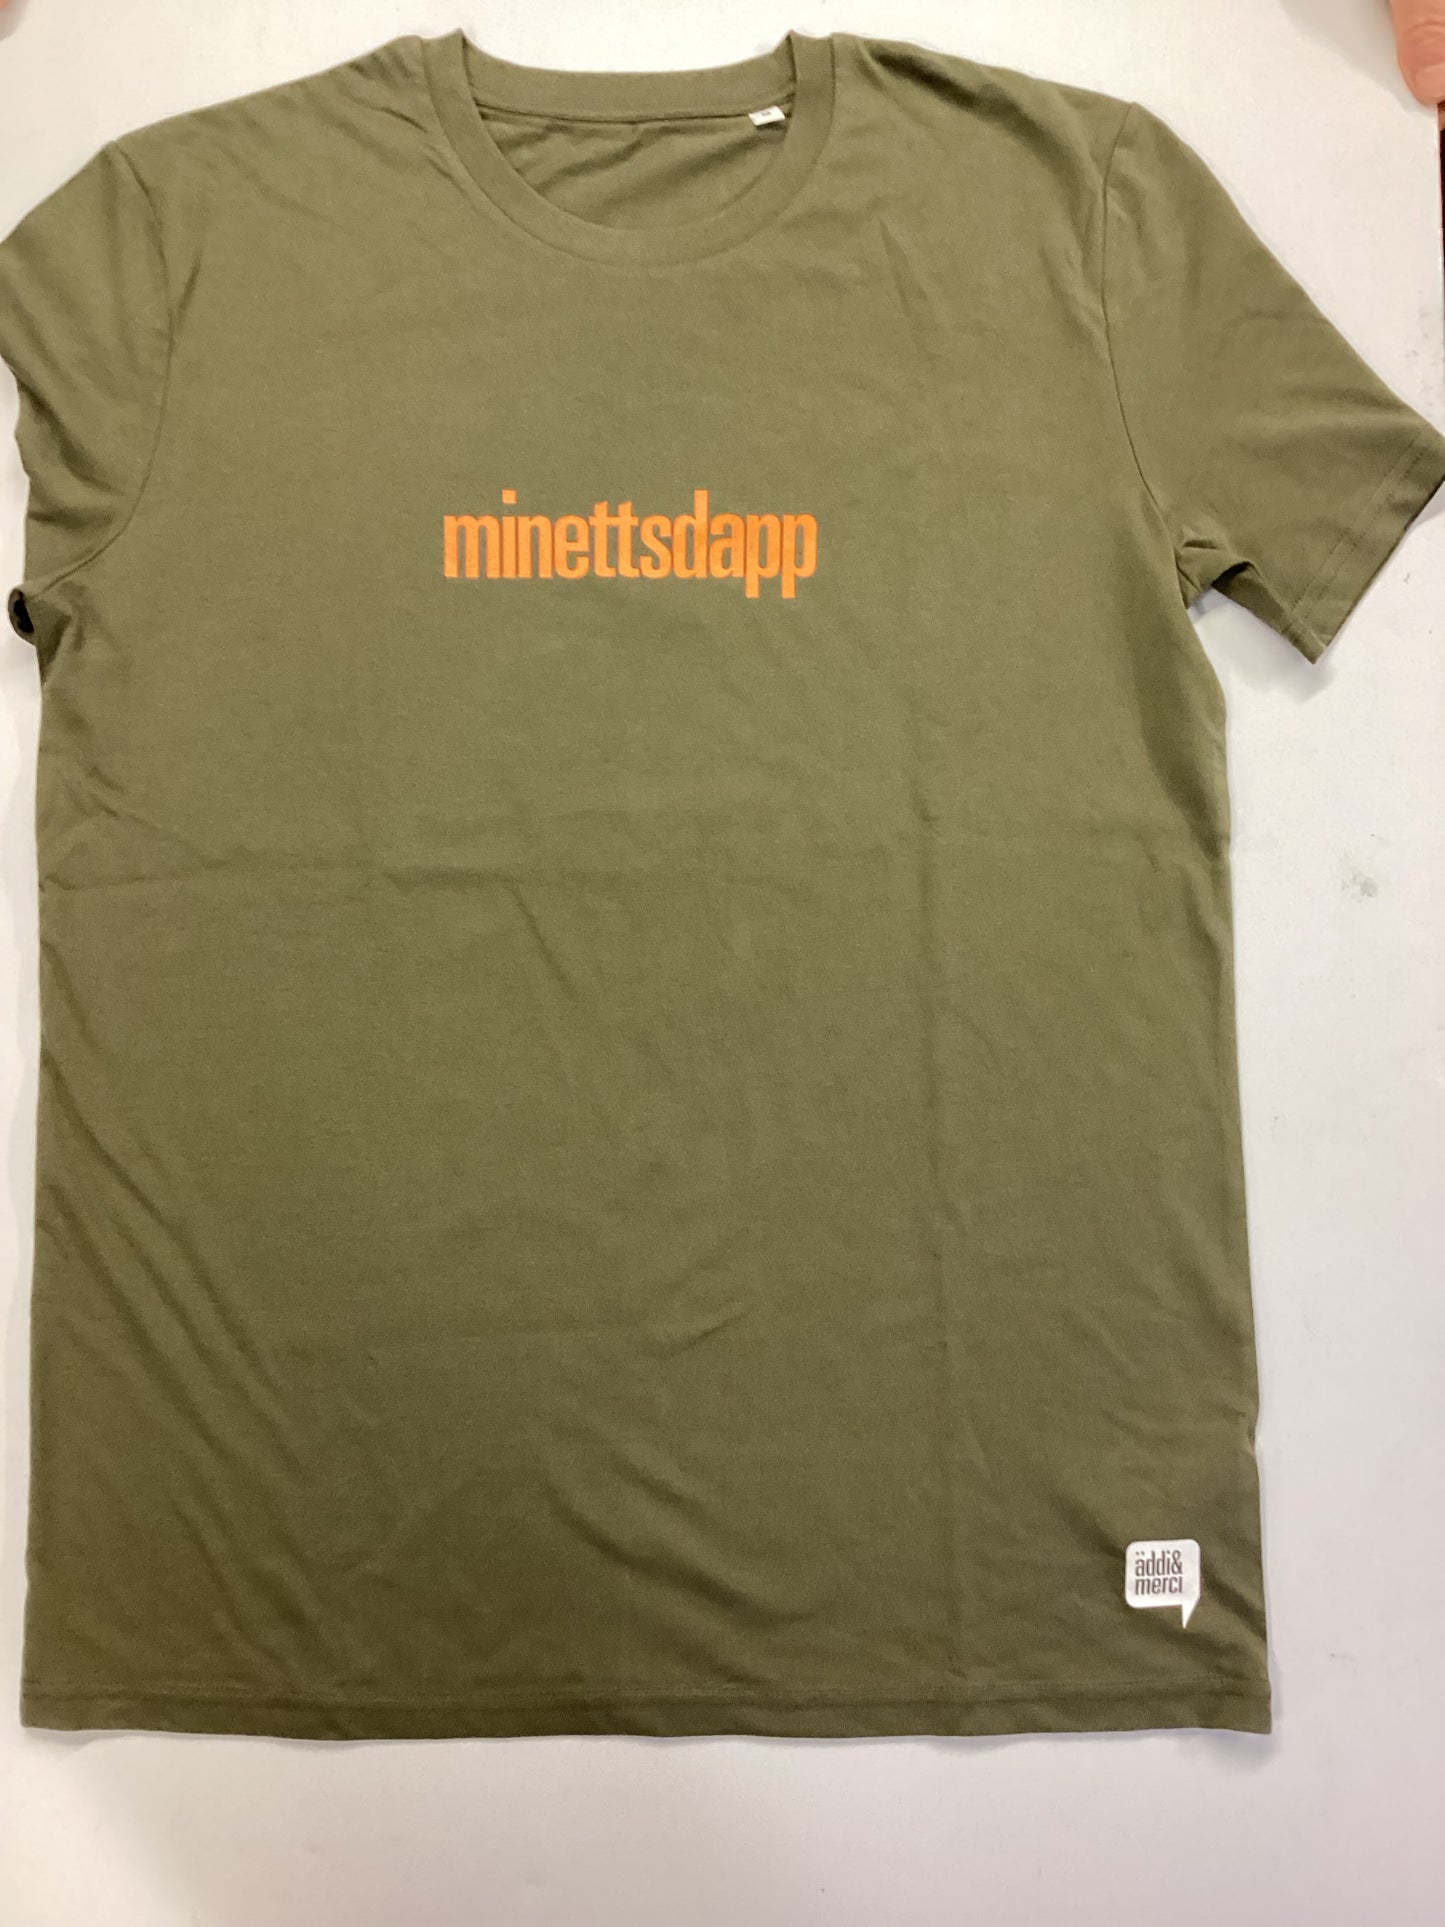 „minettsdapp“ Unisex T-Shirt